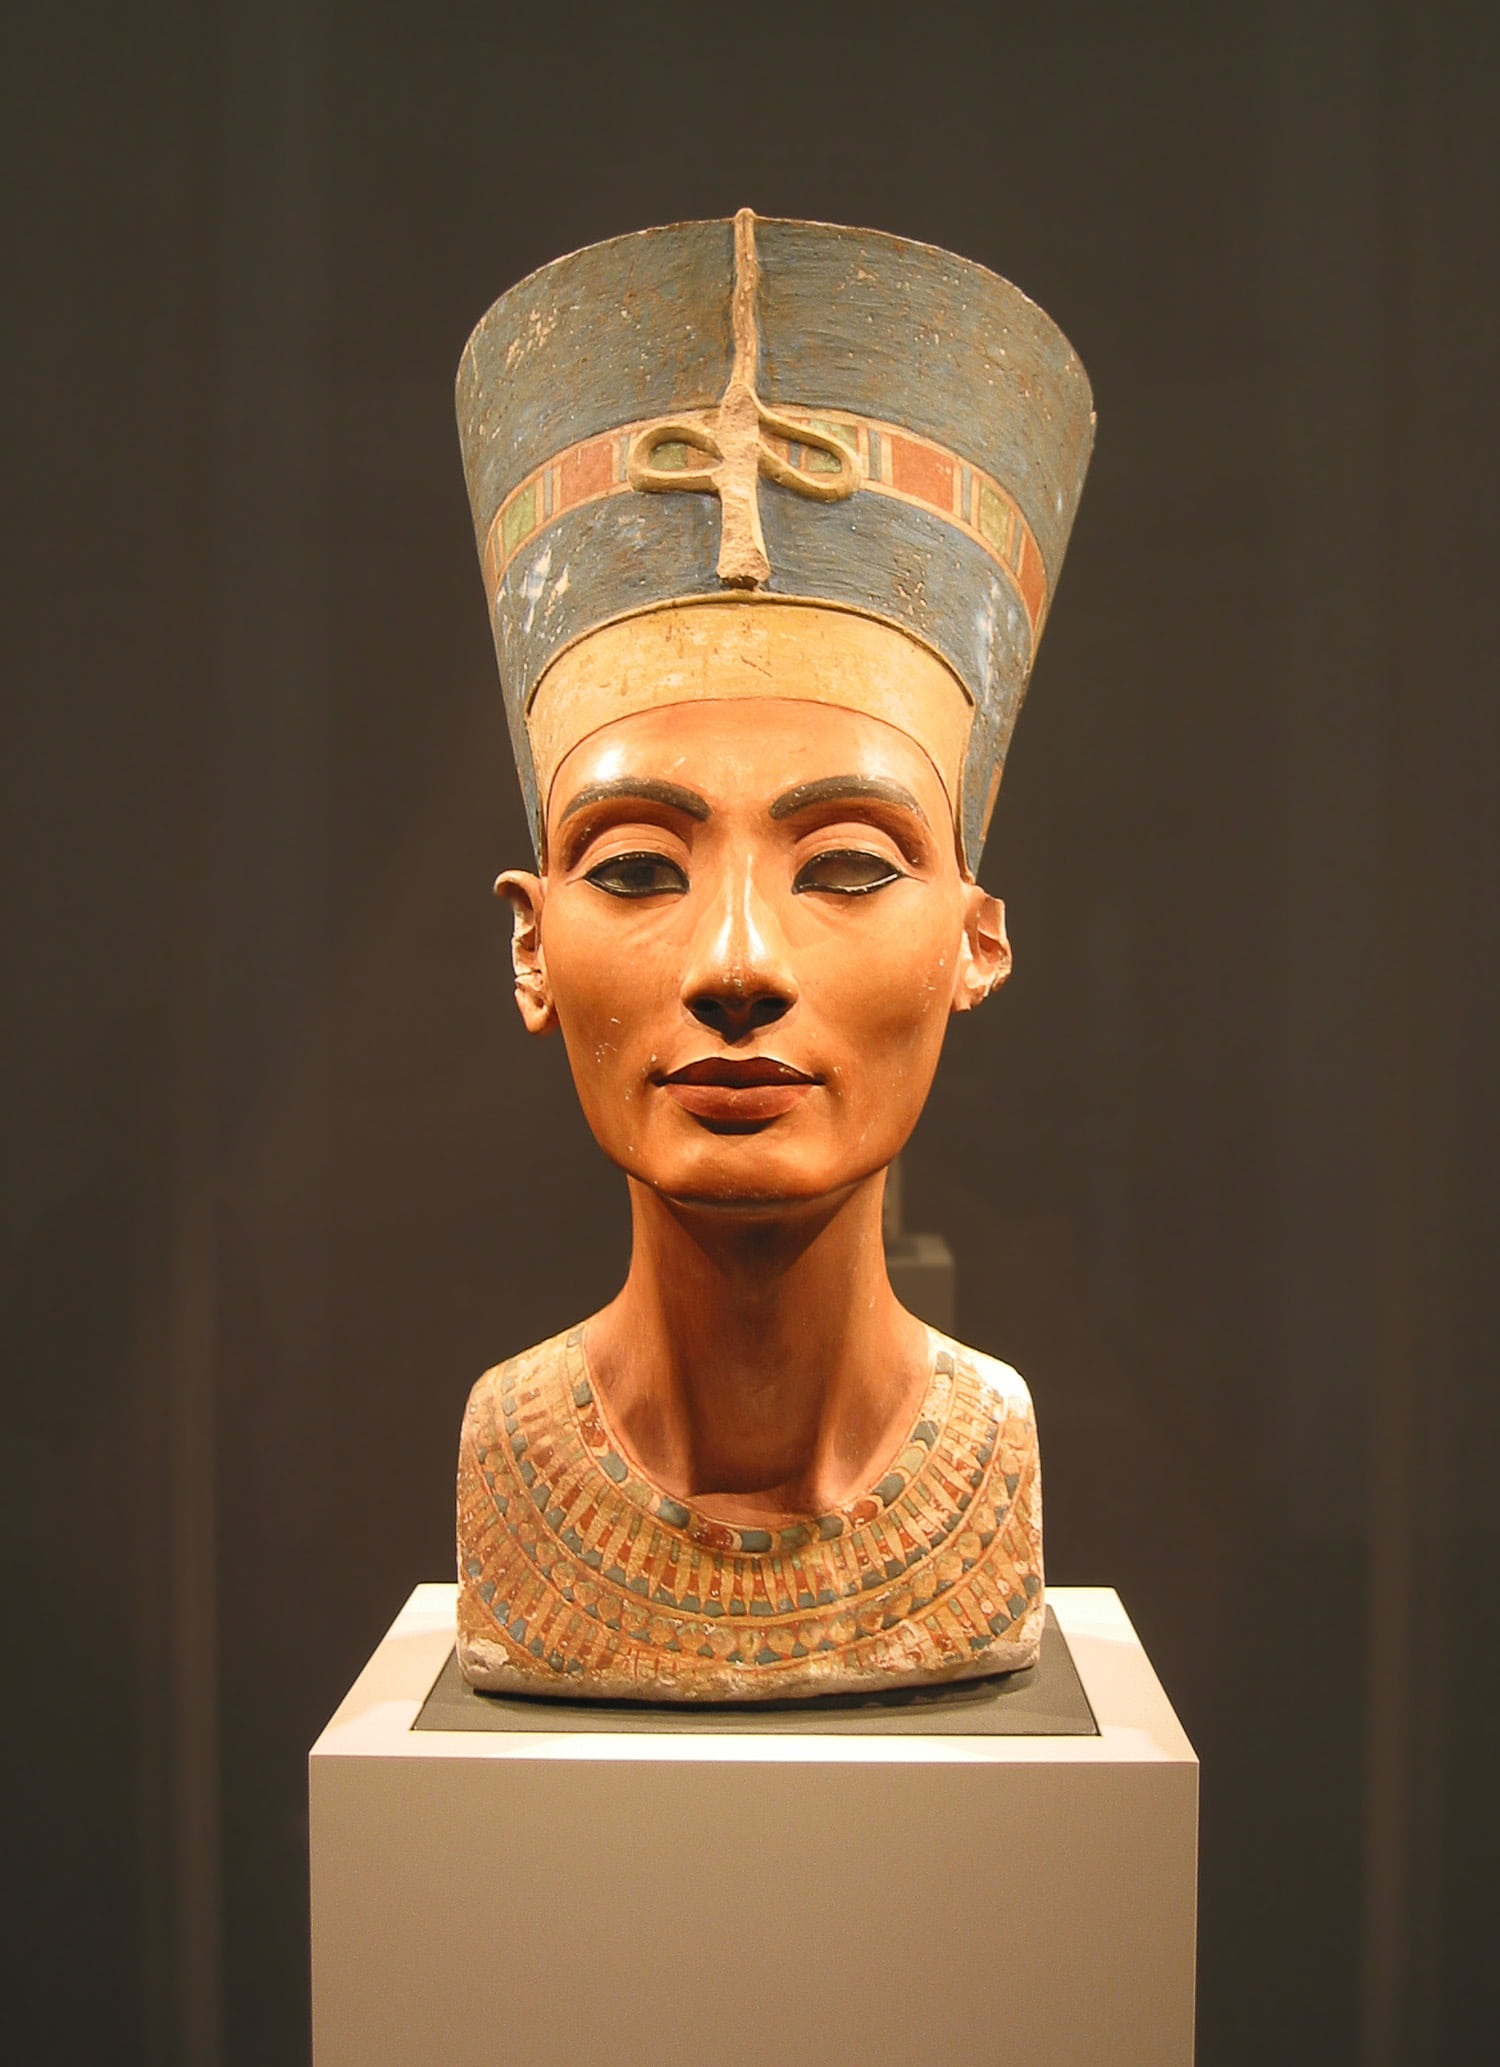 Nefertiti head bust, sculpture, berlin, puree, artwork, stone figure